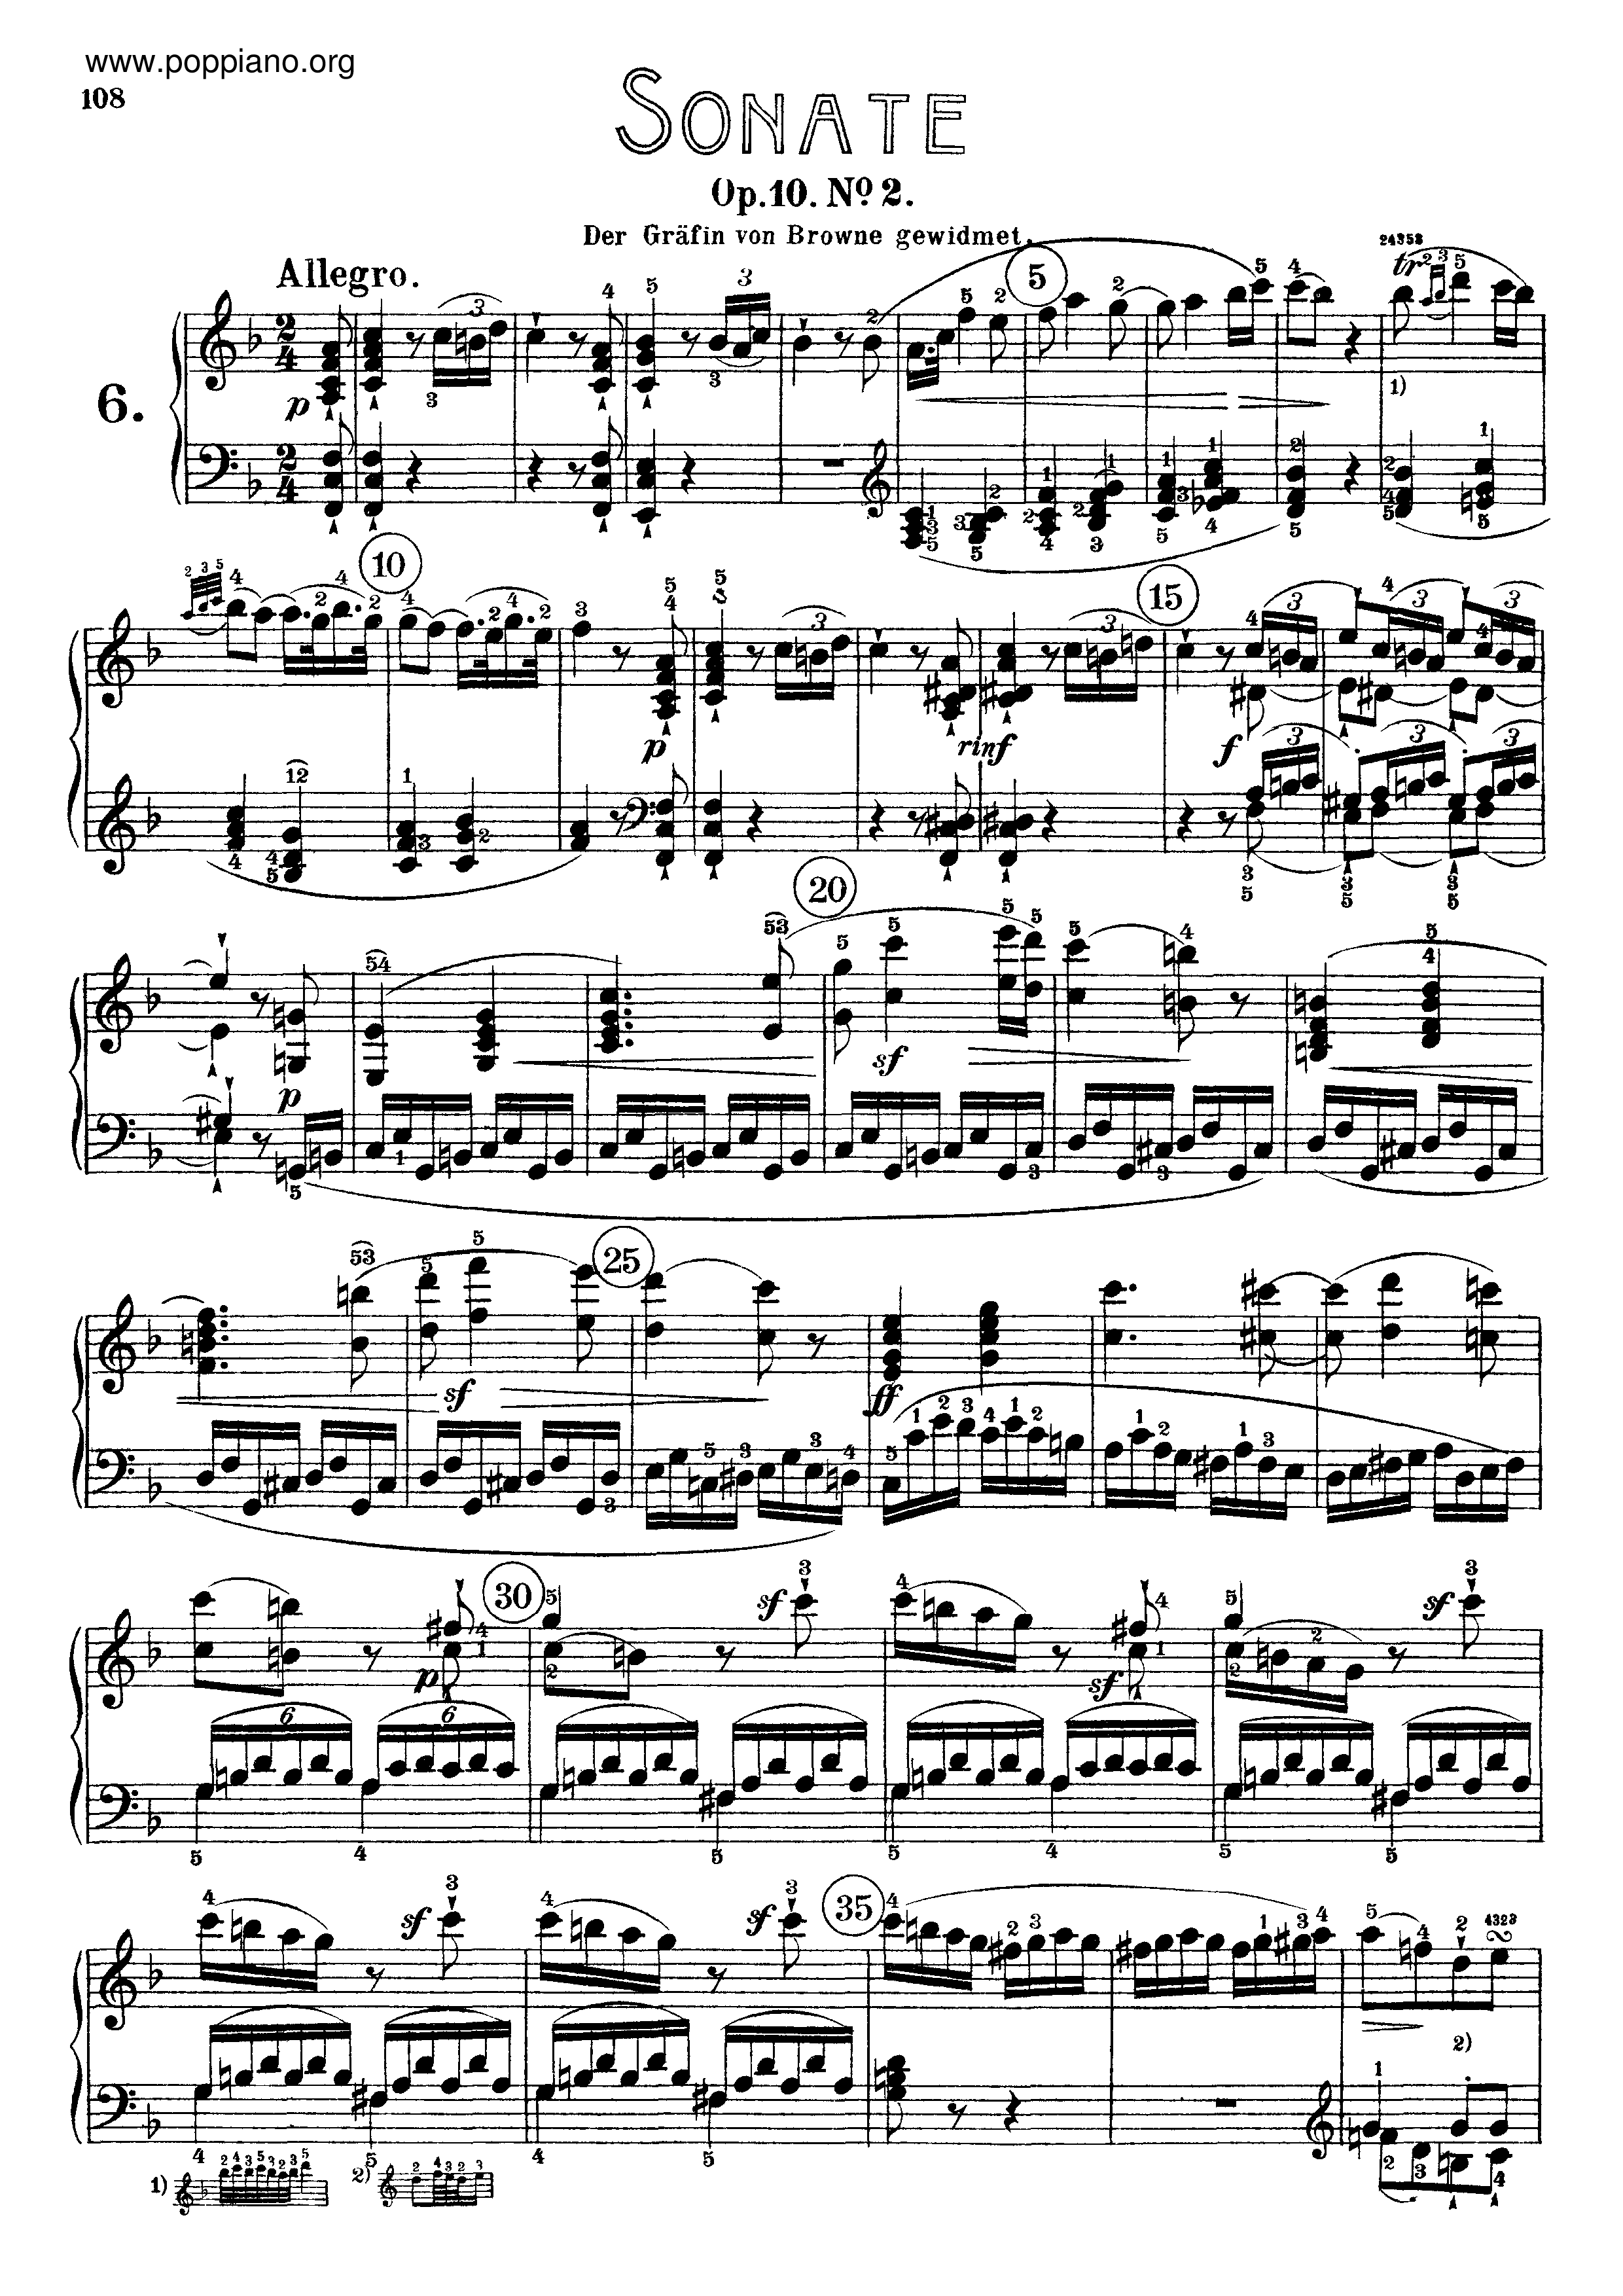 Sonata No. 6 in F major琴譜